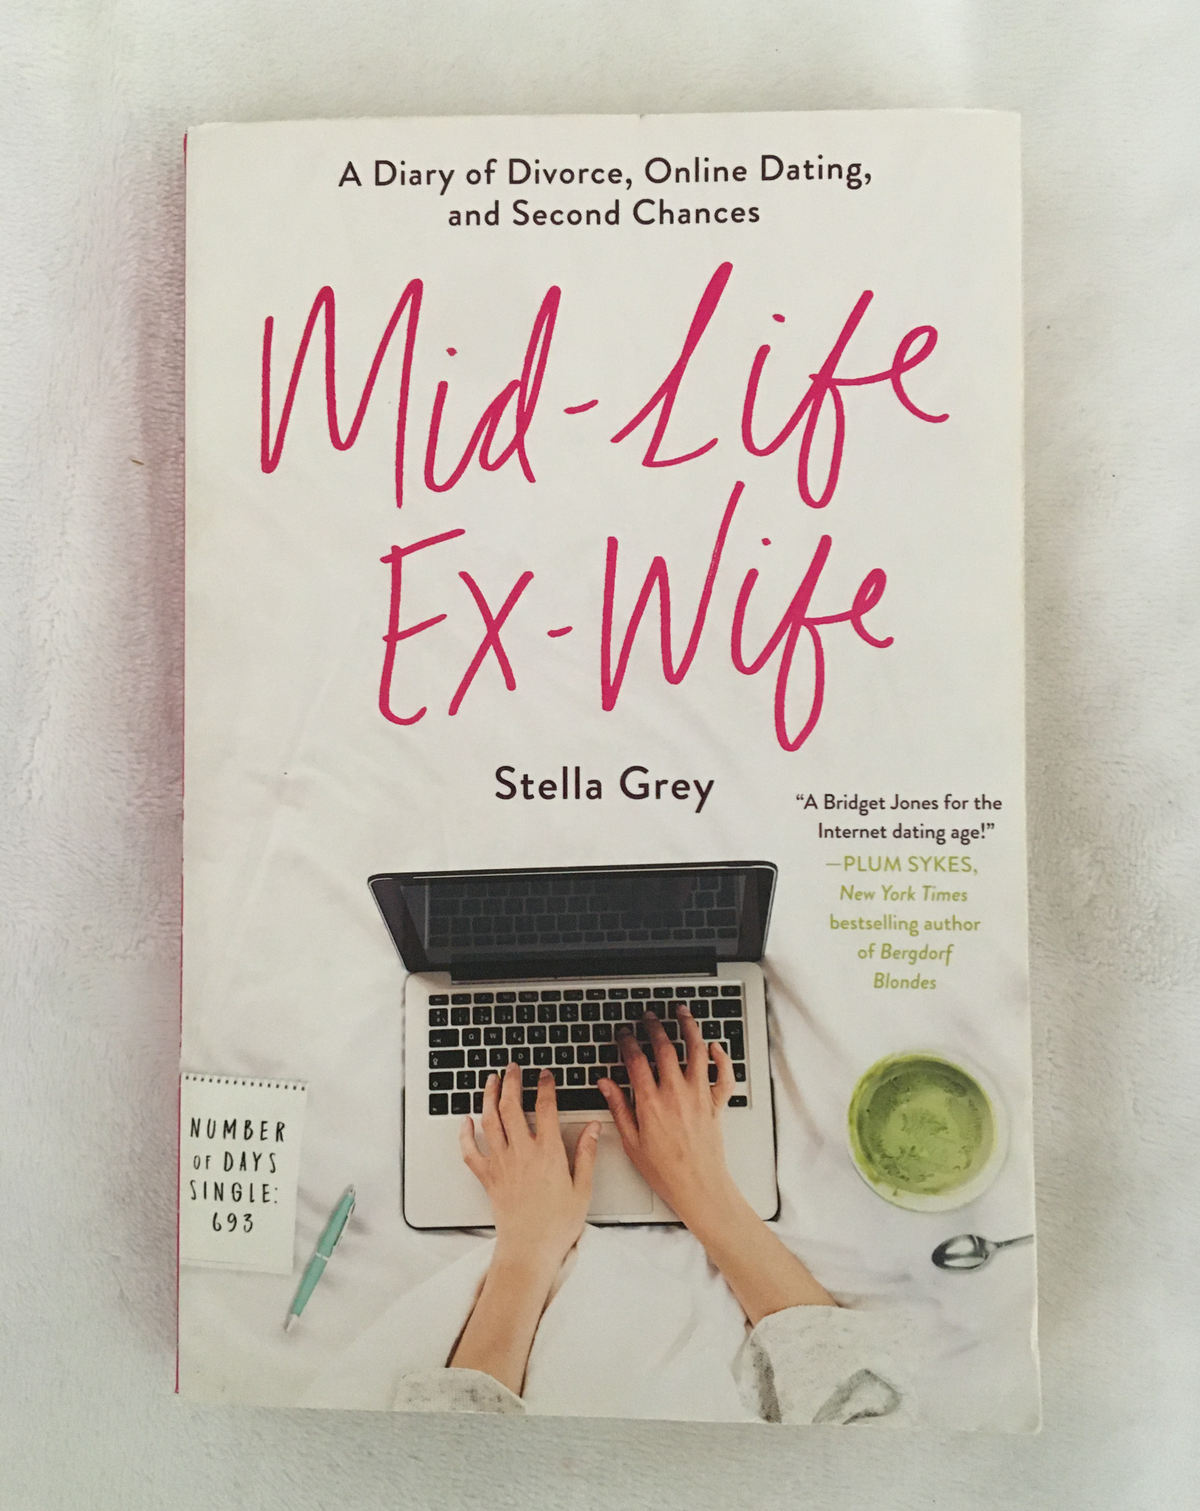 Mid-Life Ex-Wife by Stella Grey, book, Ten Dollar Books, Ten Dollar Books